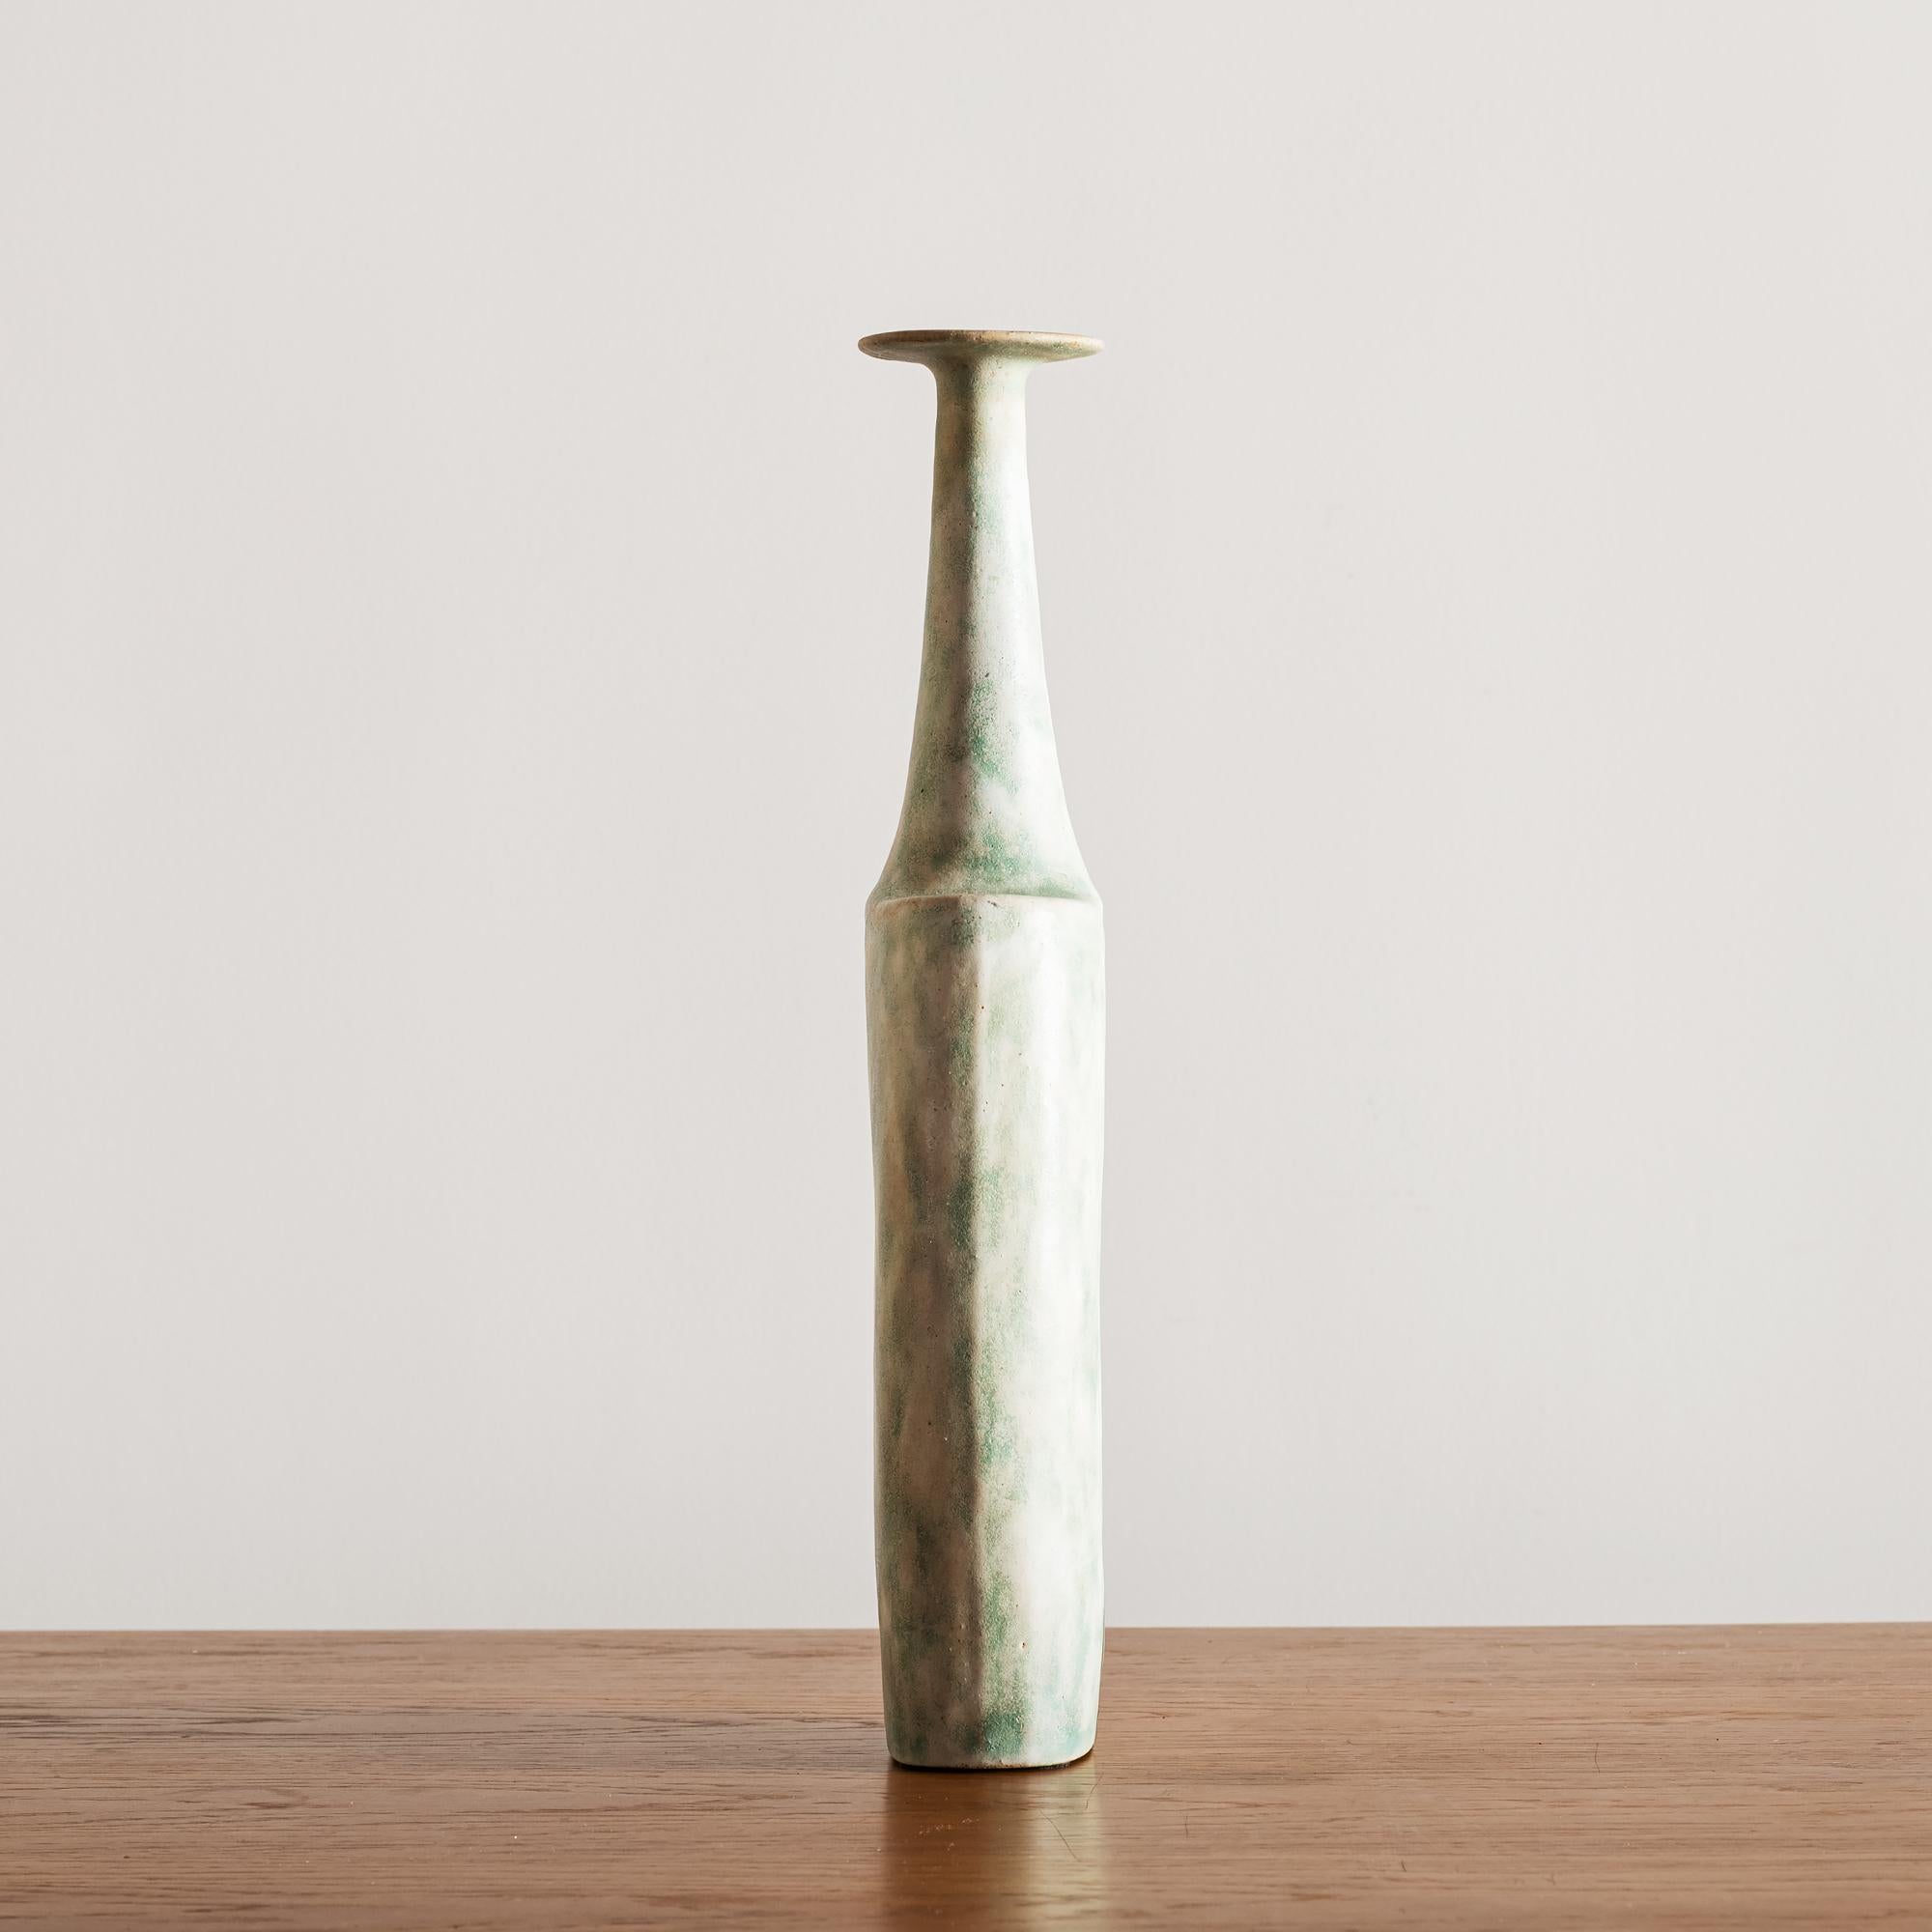 Elegant and sculptural Bruno Gambone bottle-form vase in green tones, signed. Italy, 1970s.